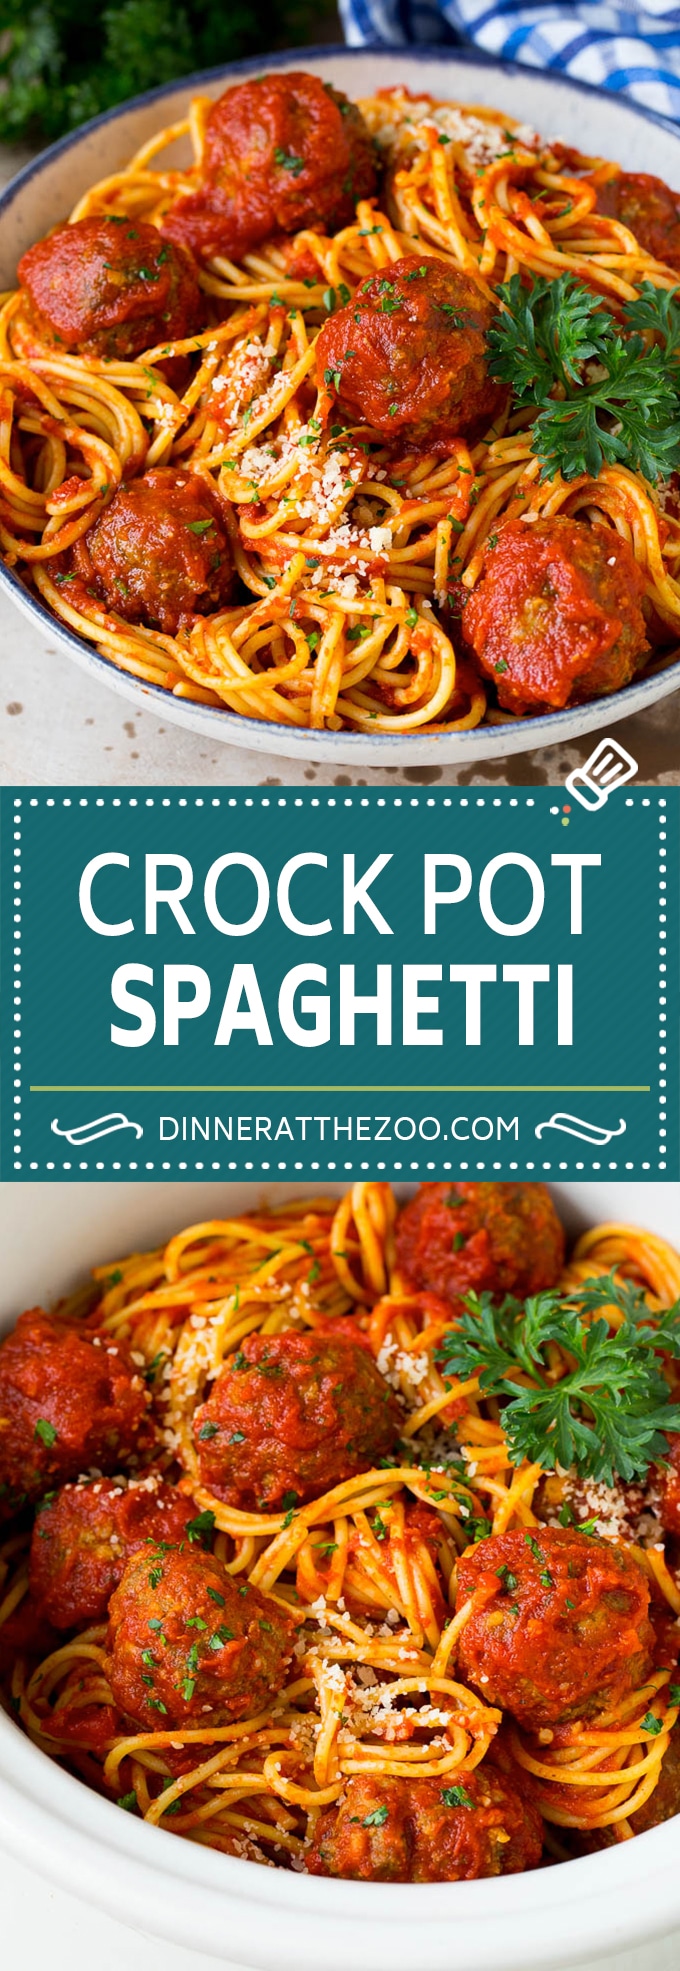 Crock Pot Spaghetti Dinner At The Zoo